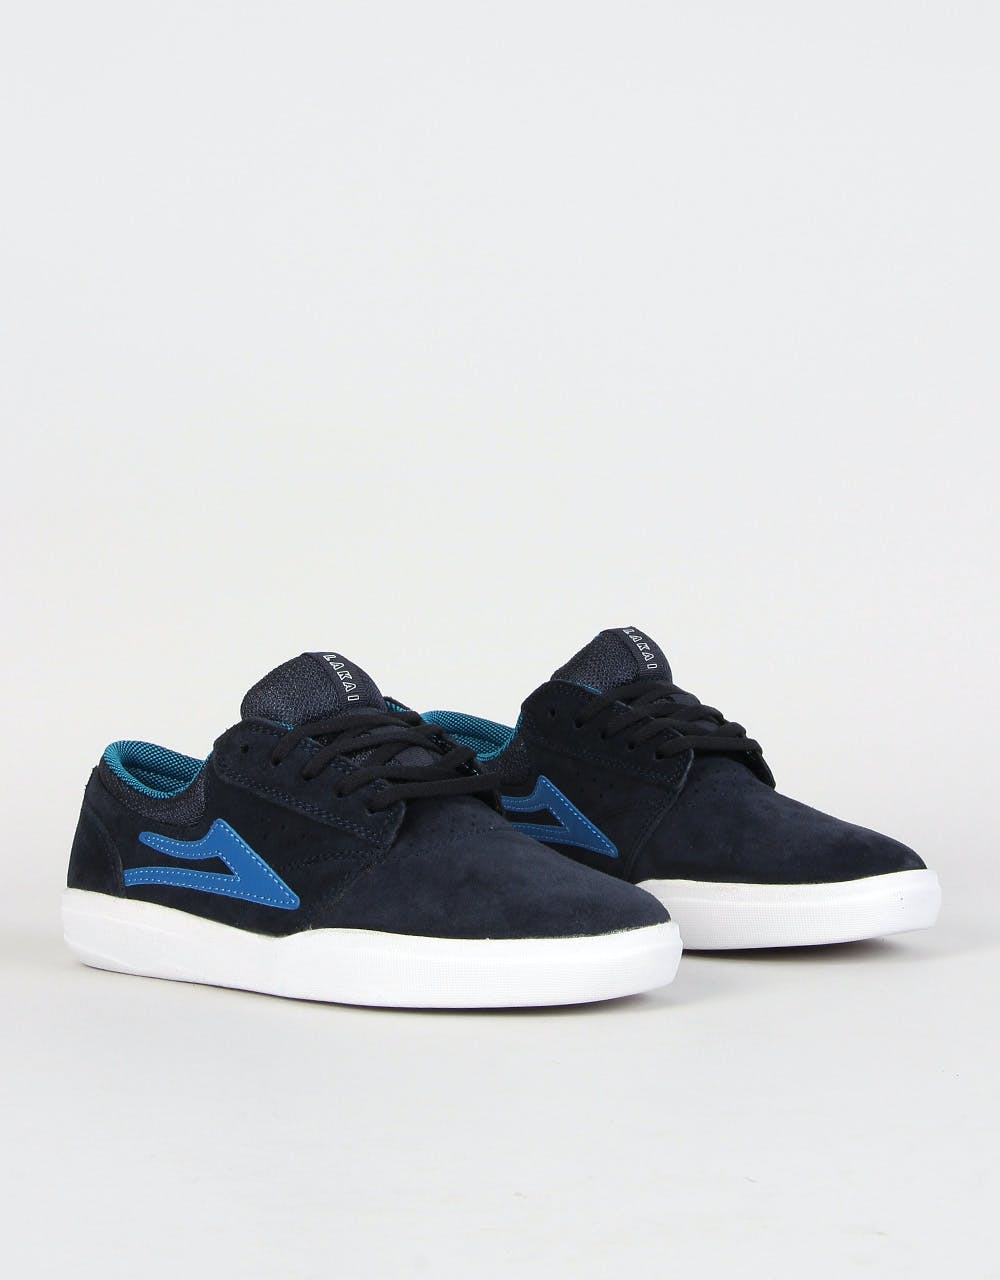 Lakai Griffin XLK Skate Shoes - Navy/Royal Suede